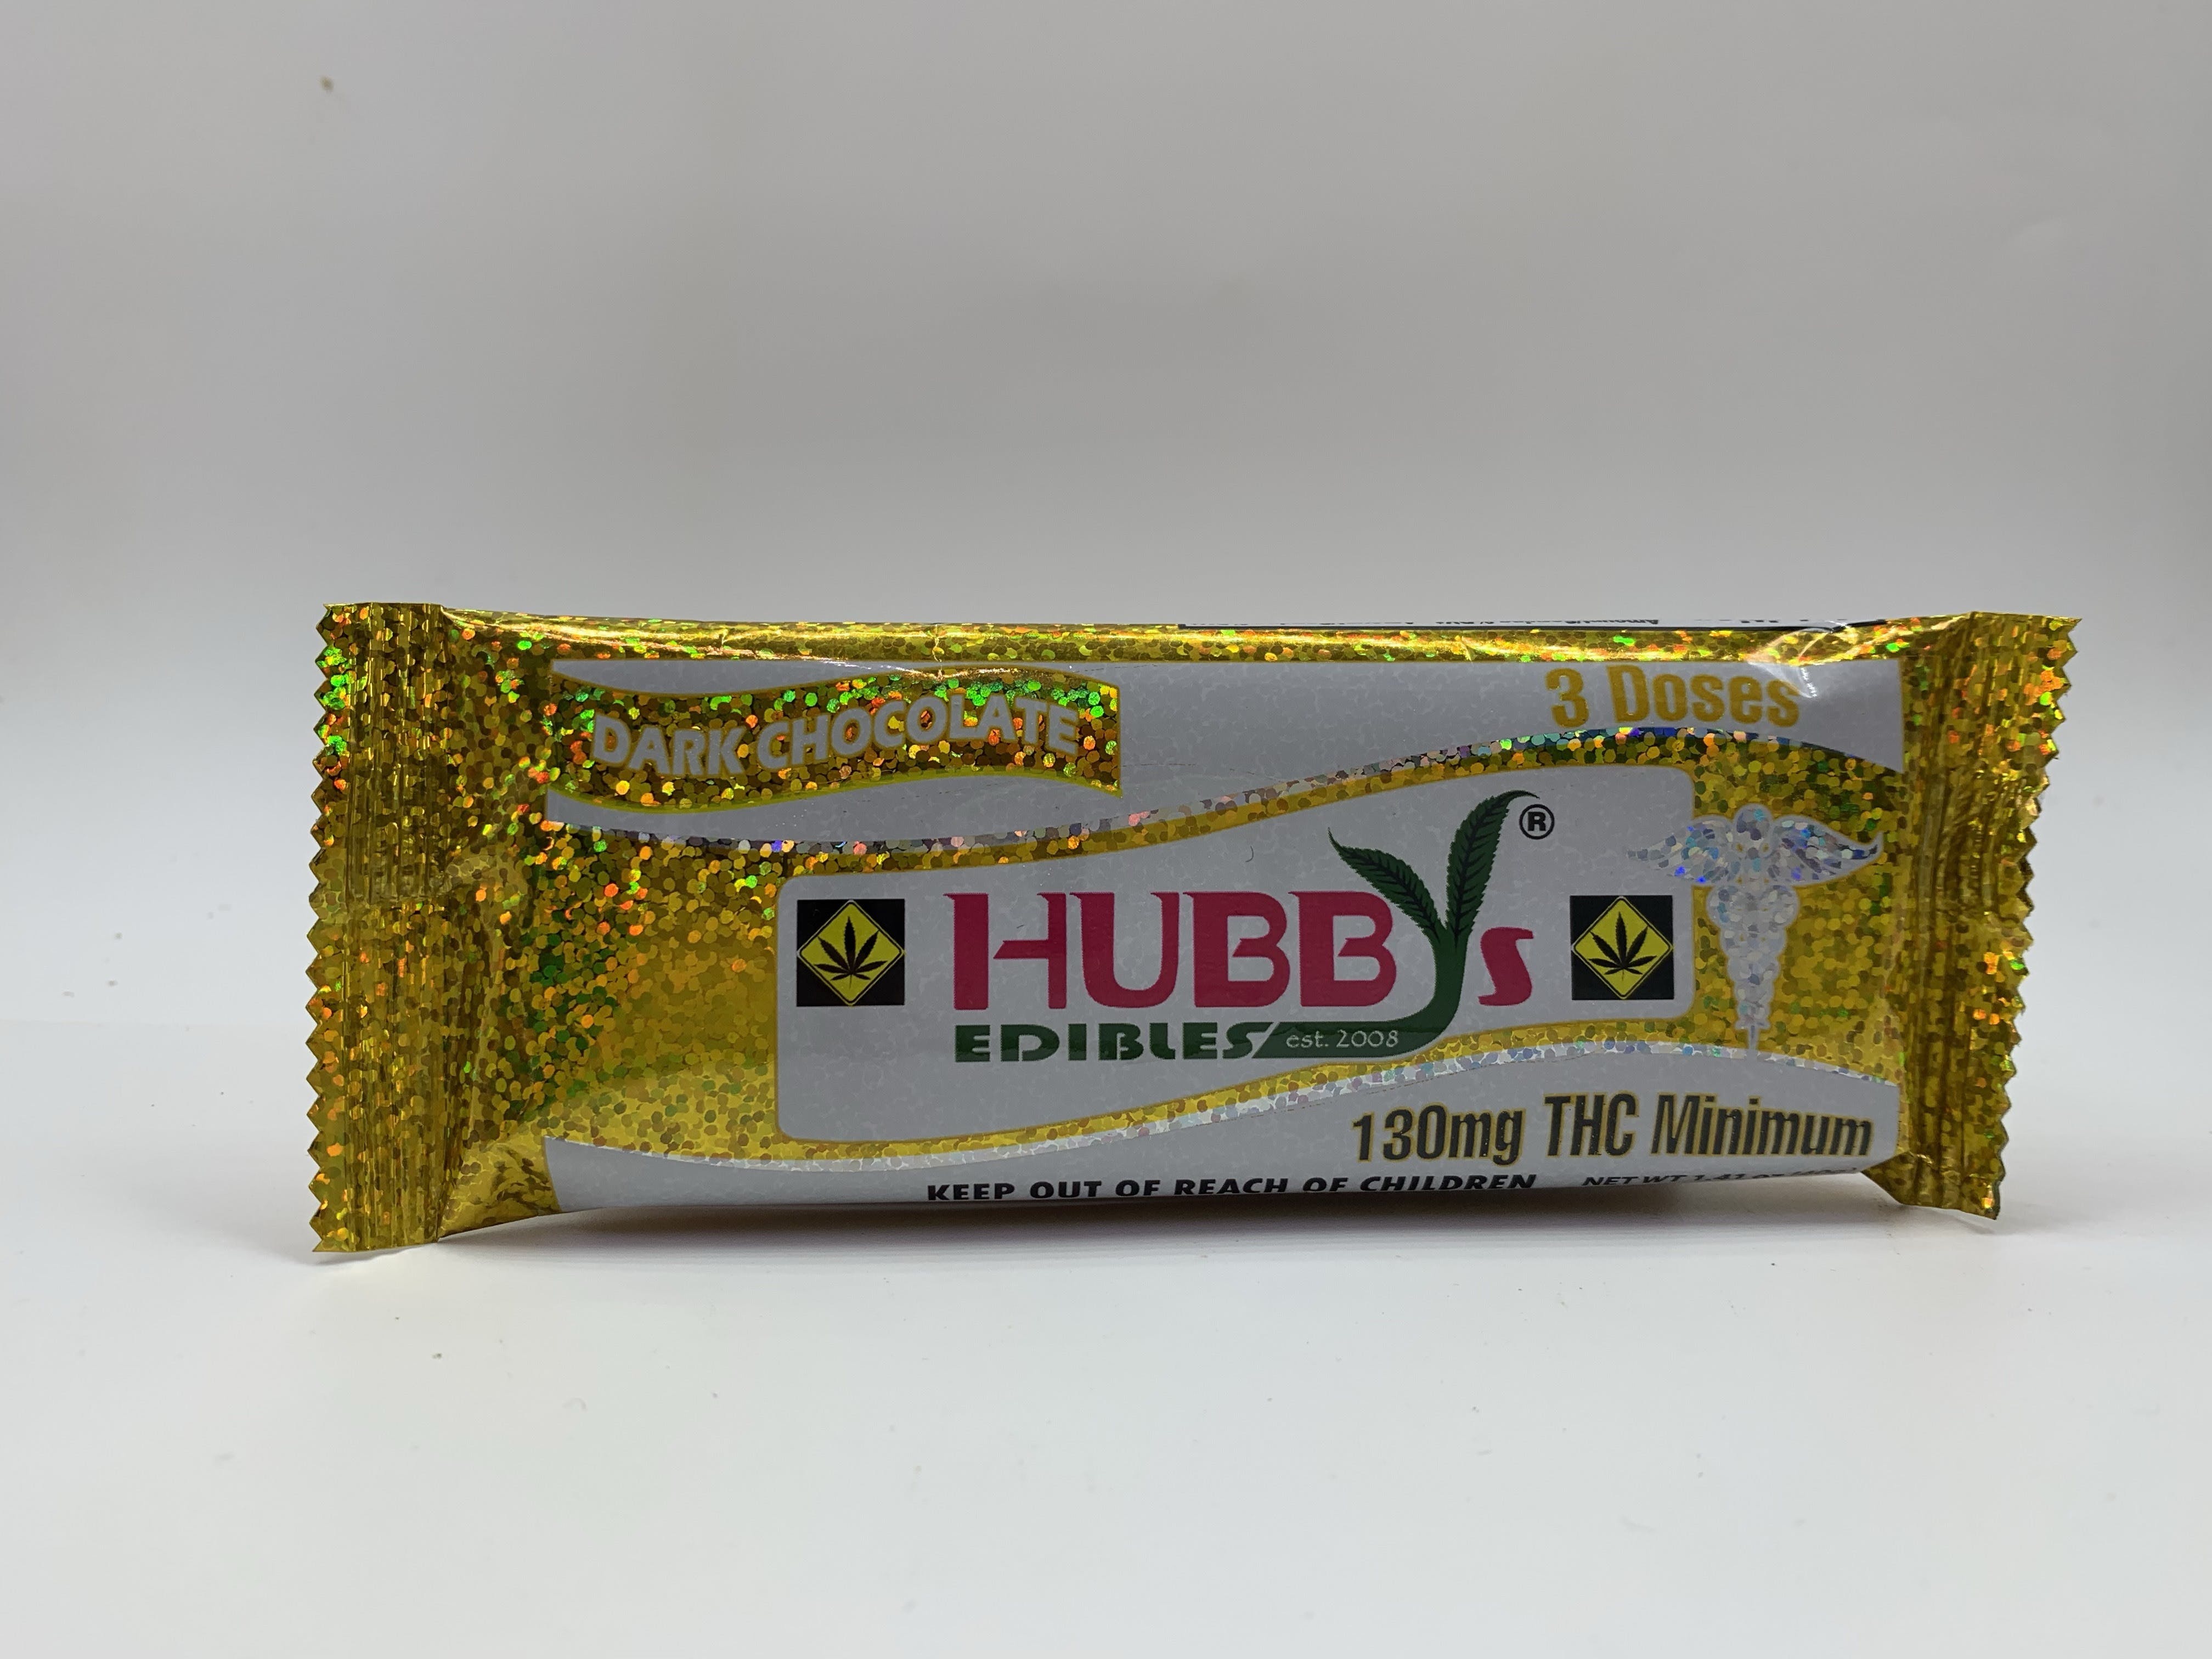 edible-hubbys-dark-chocolate-bar